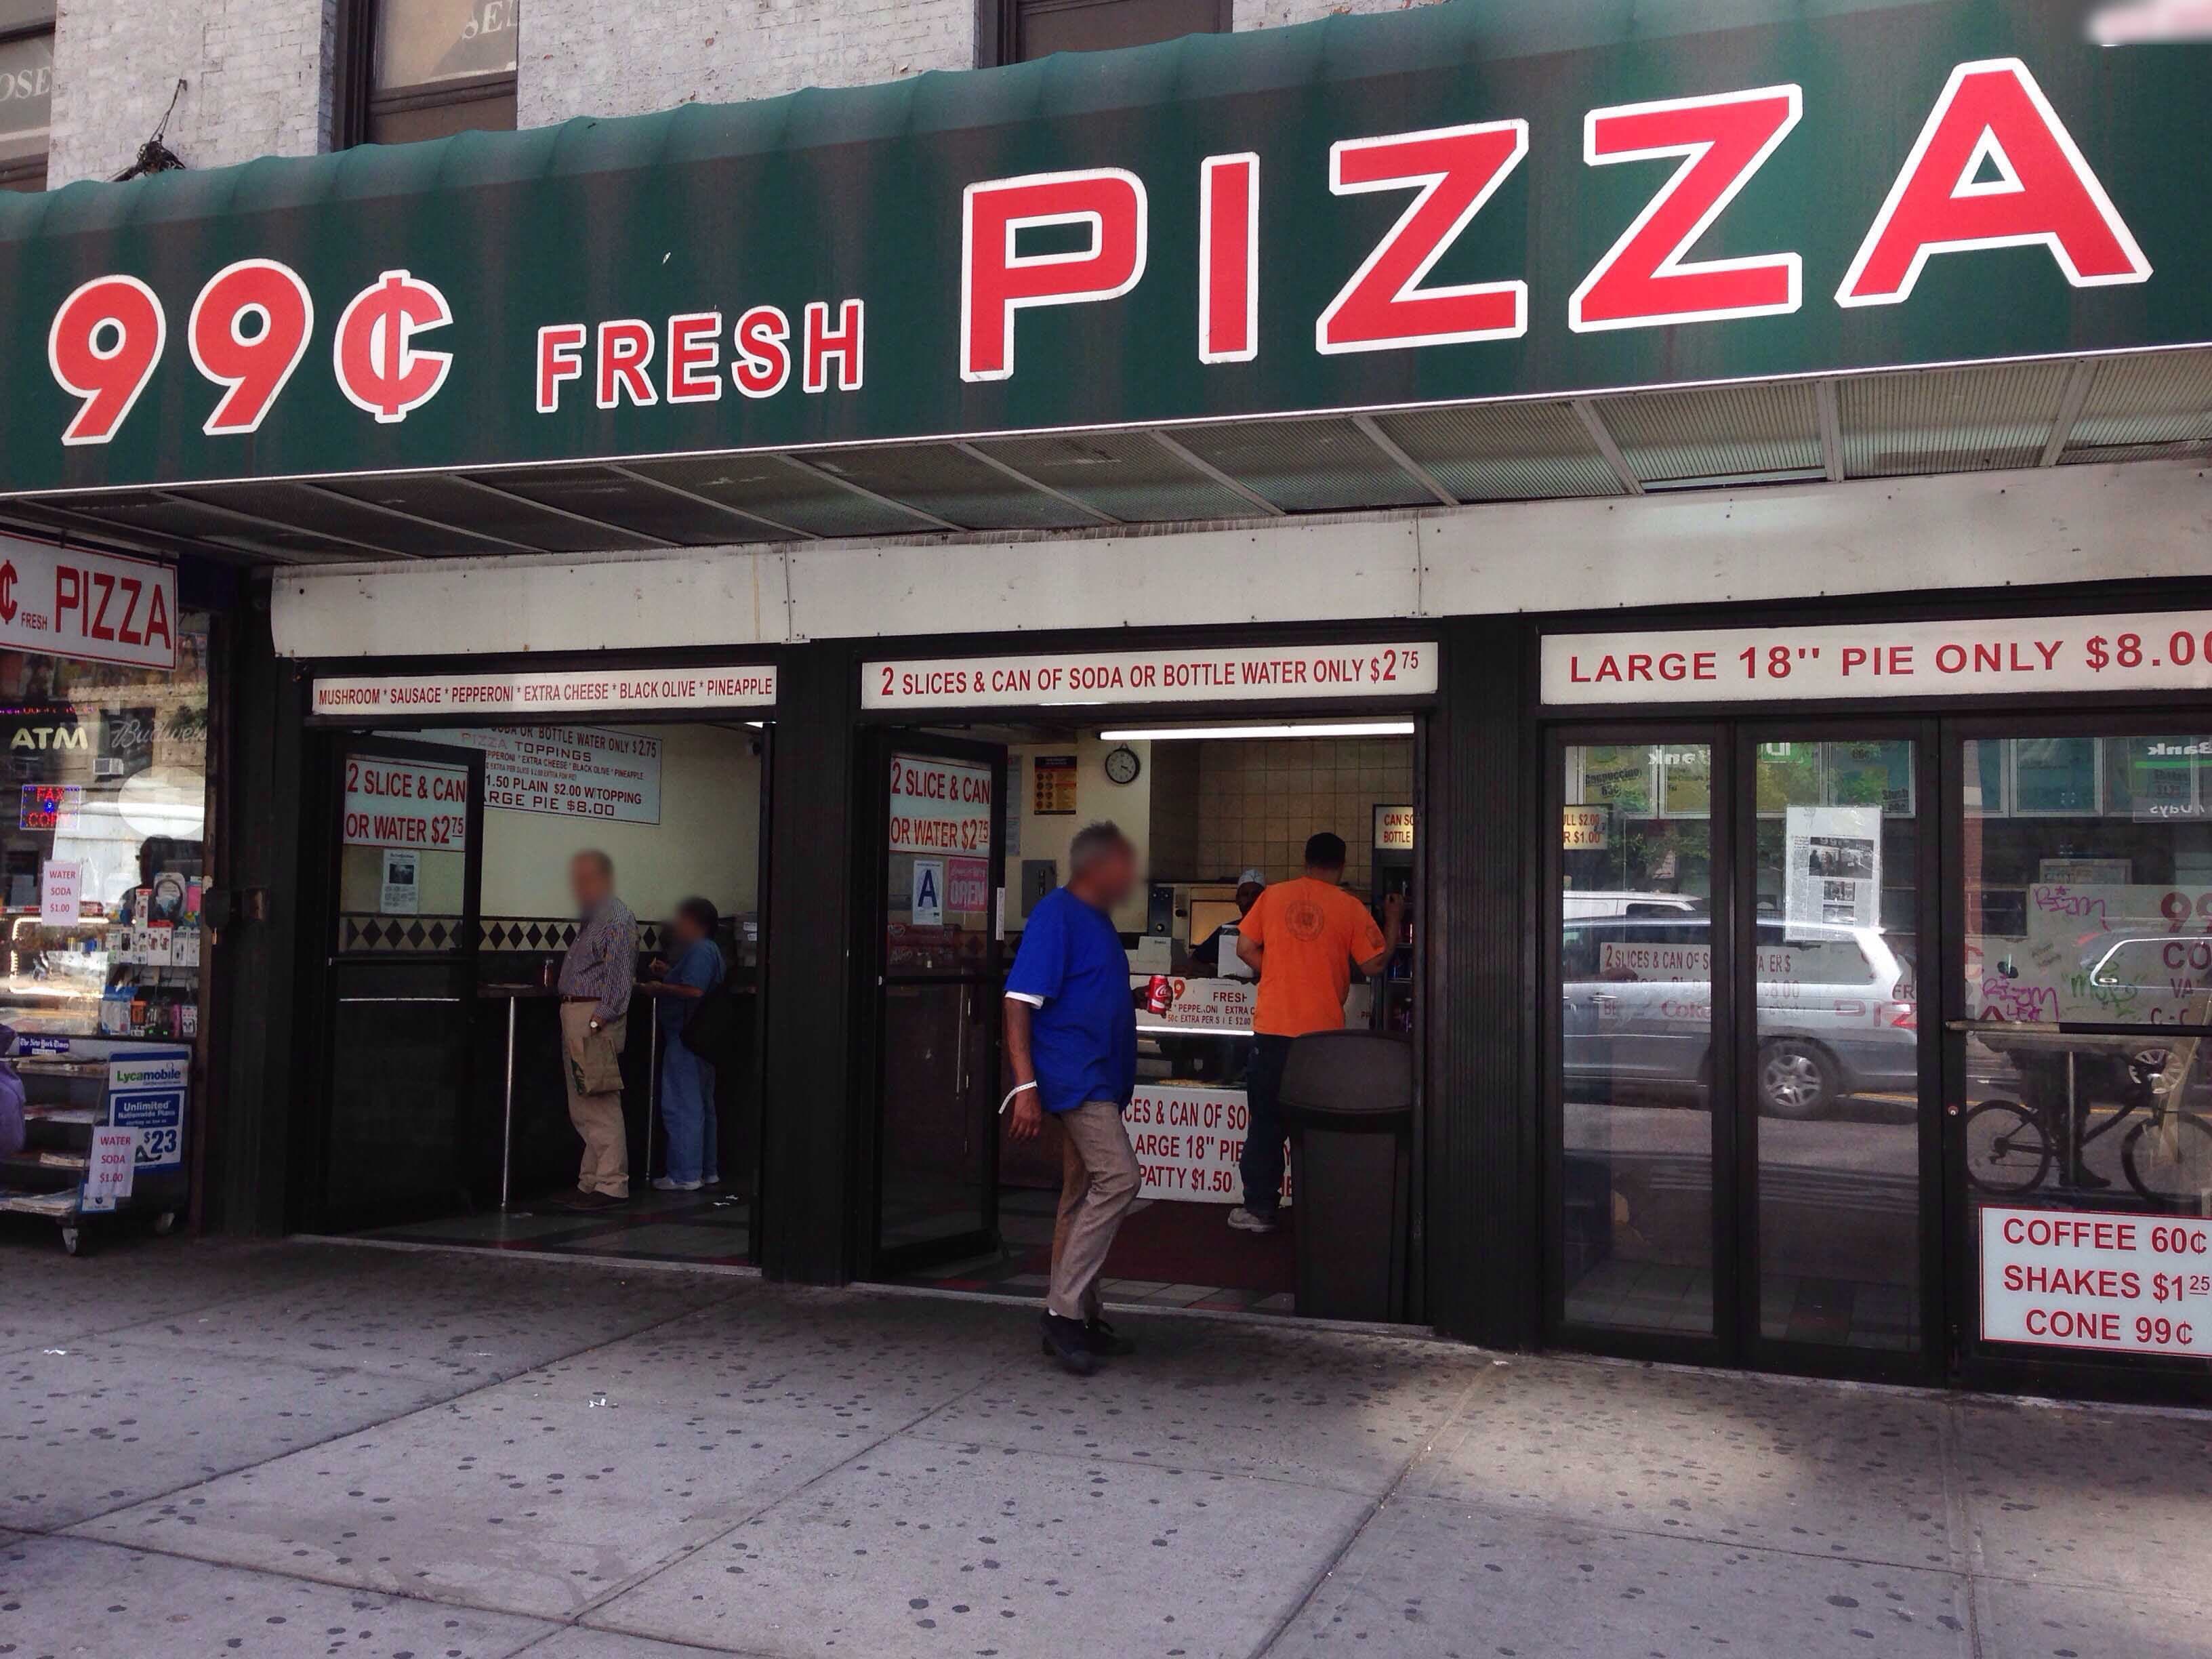 10036 99 Cents Fresh Pizza Chelsea, Manhattan Manhattan New York City